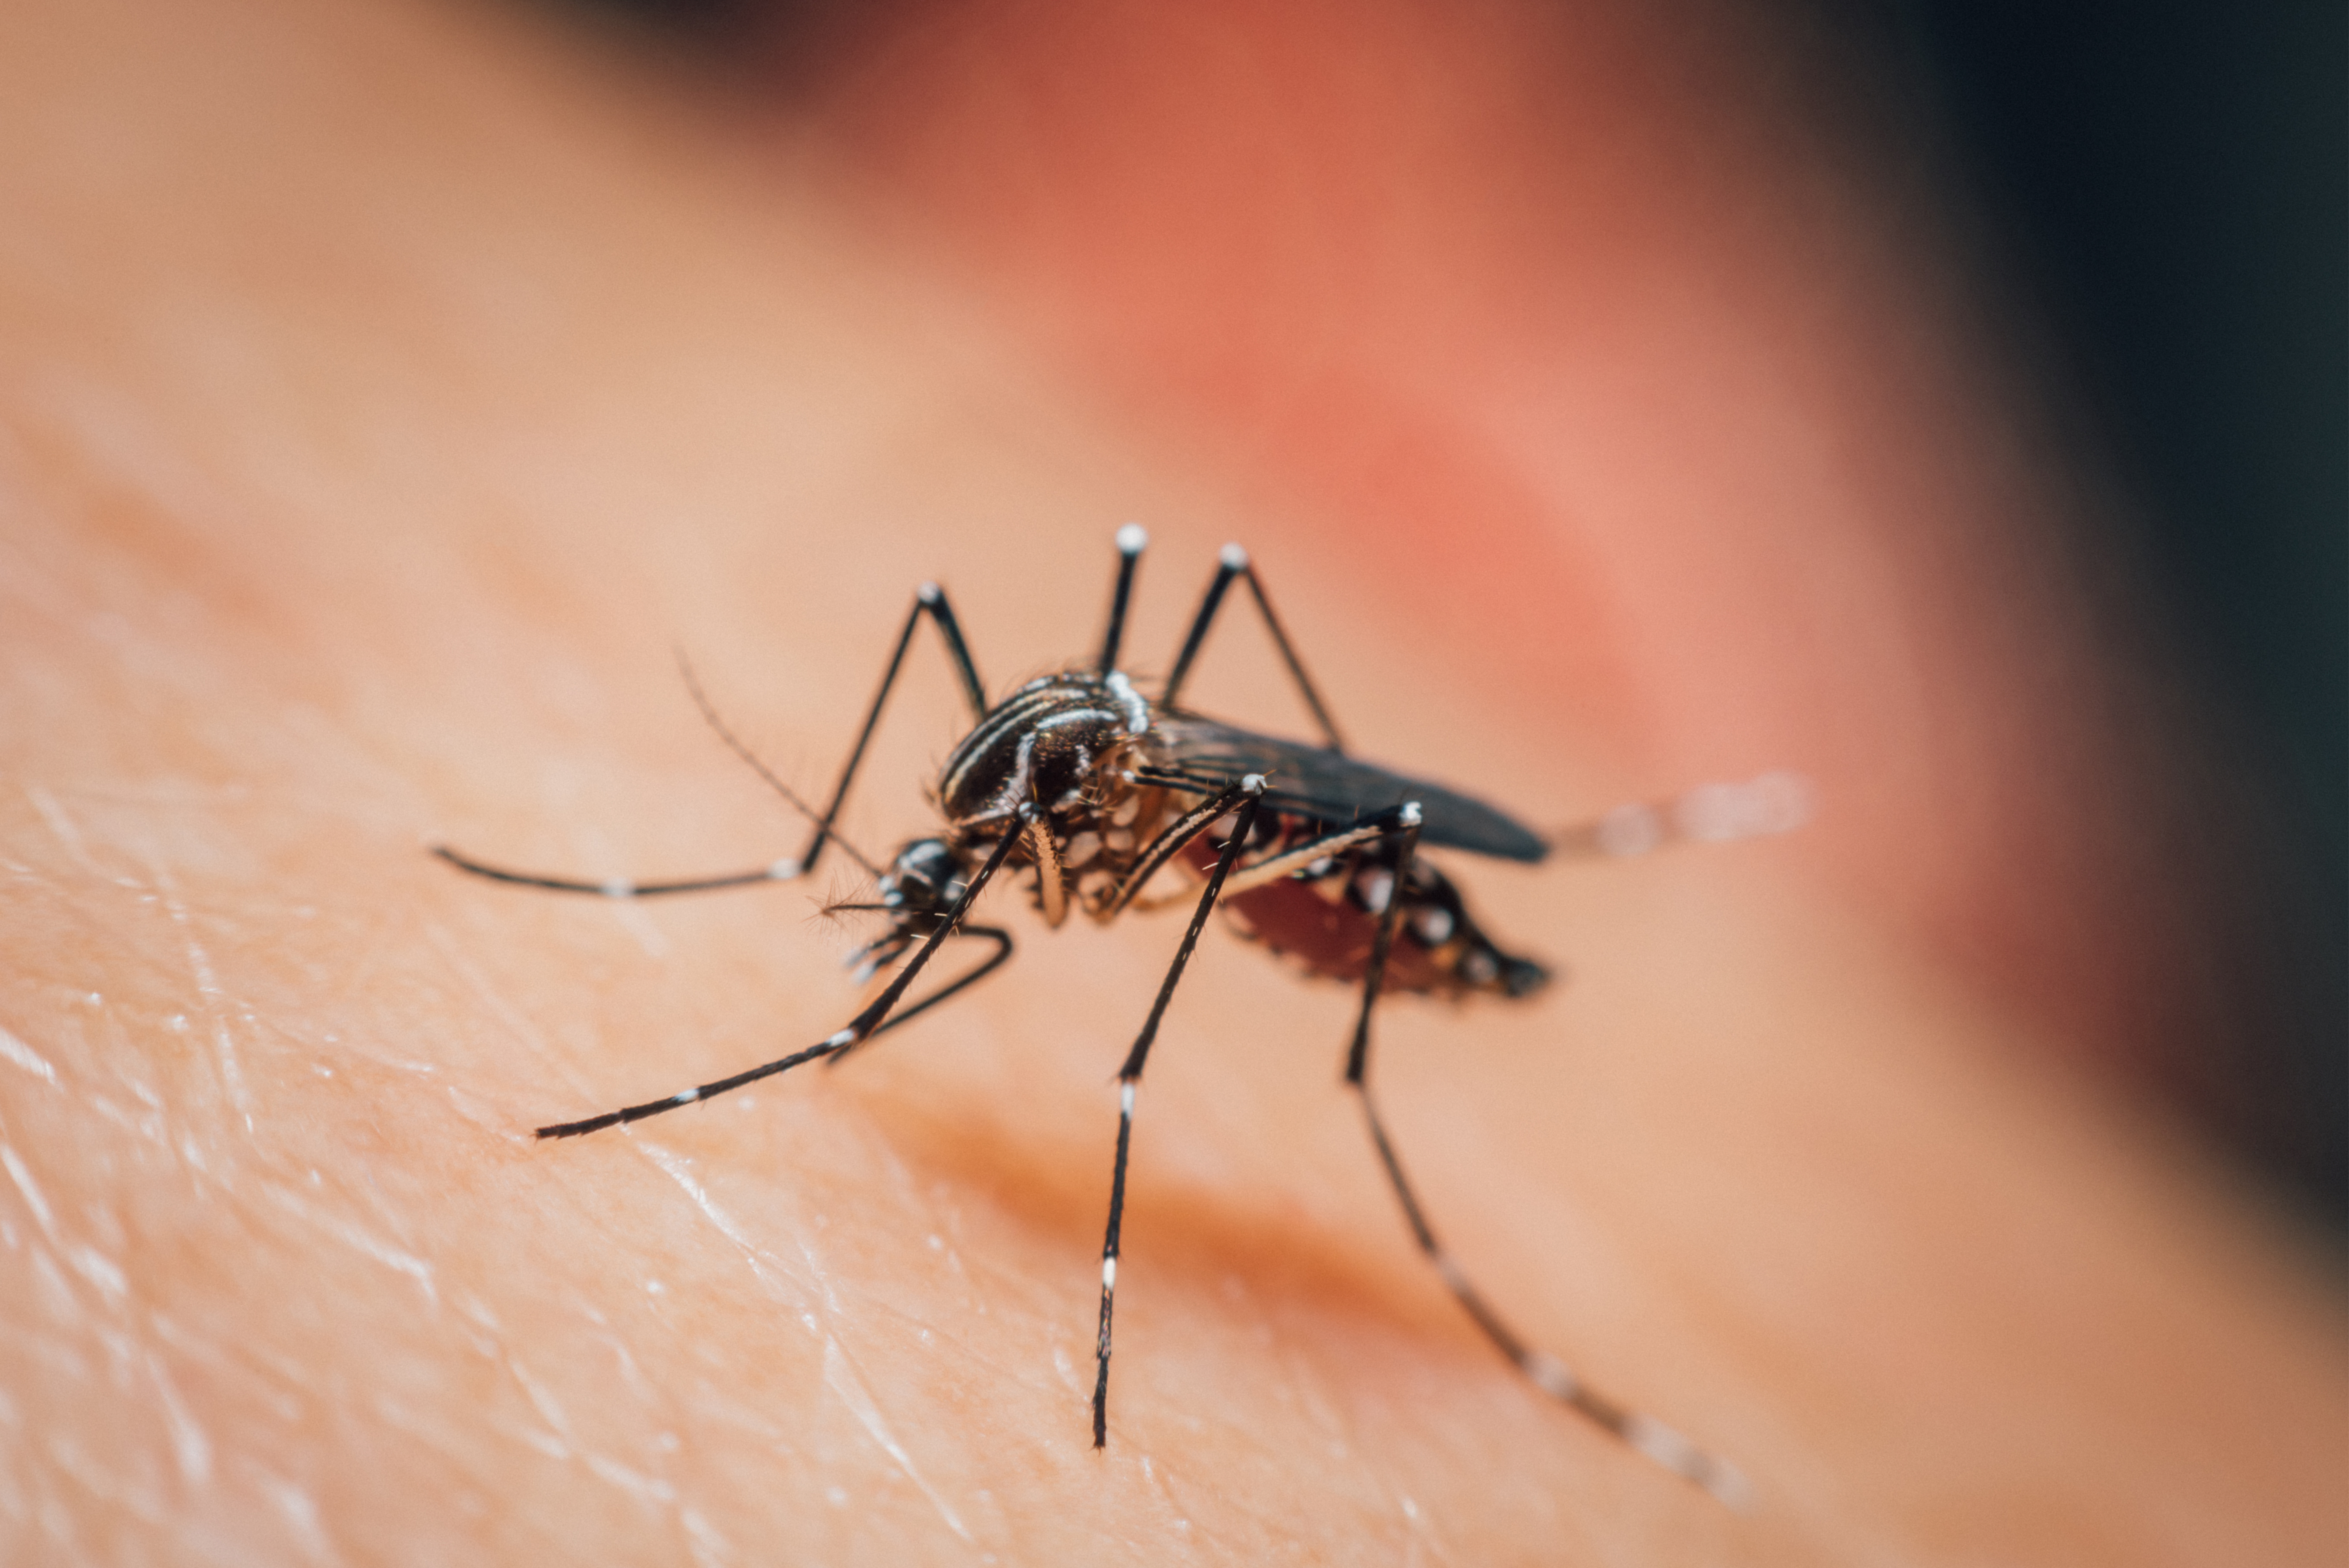 Culex tarsaris (mosquito) on human skin.